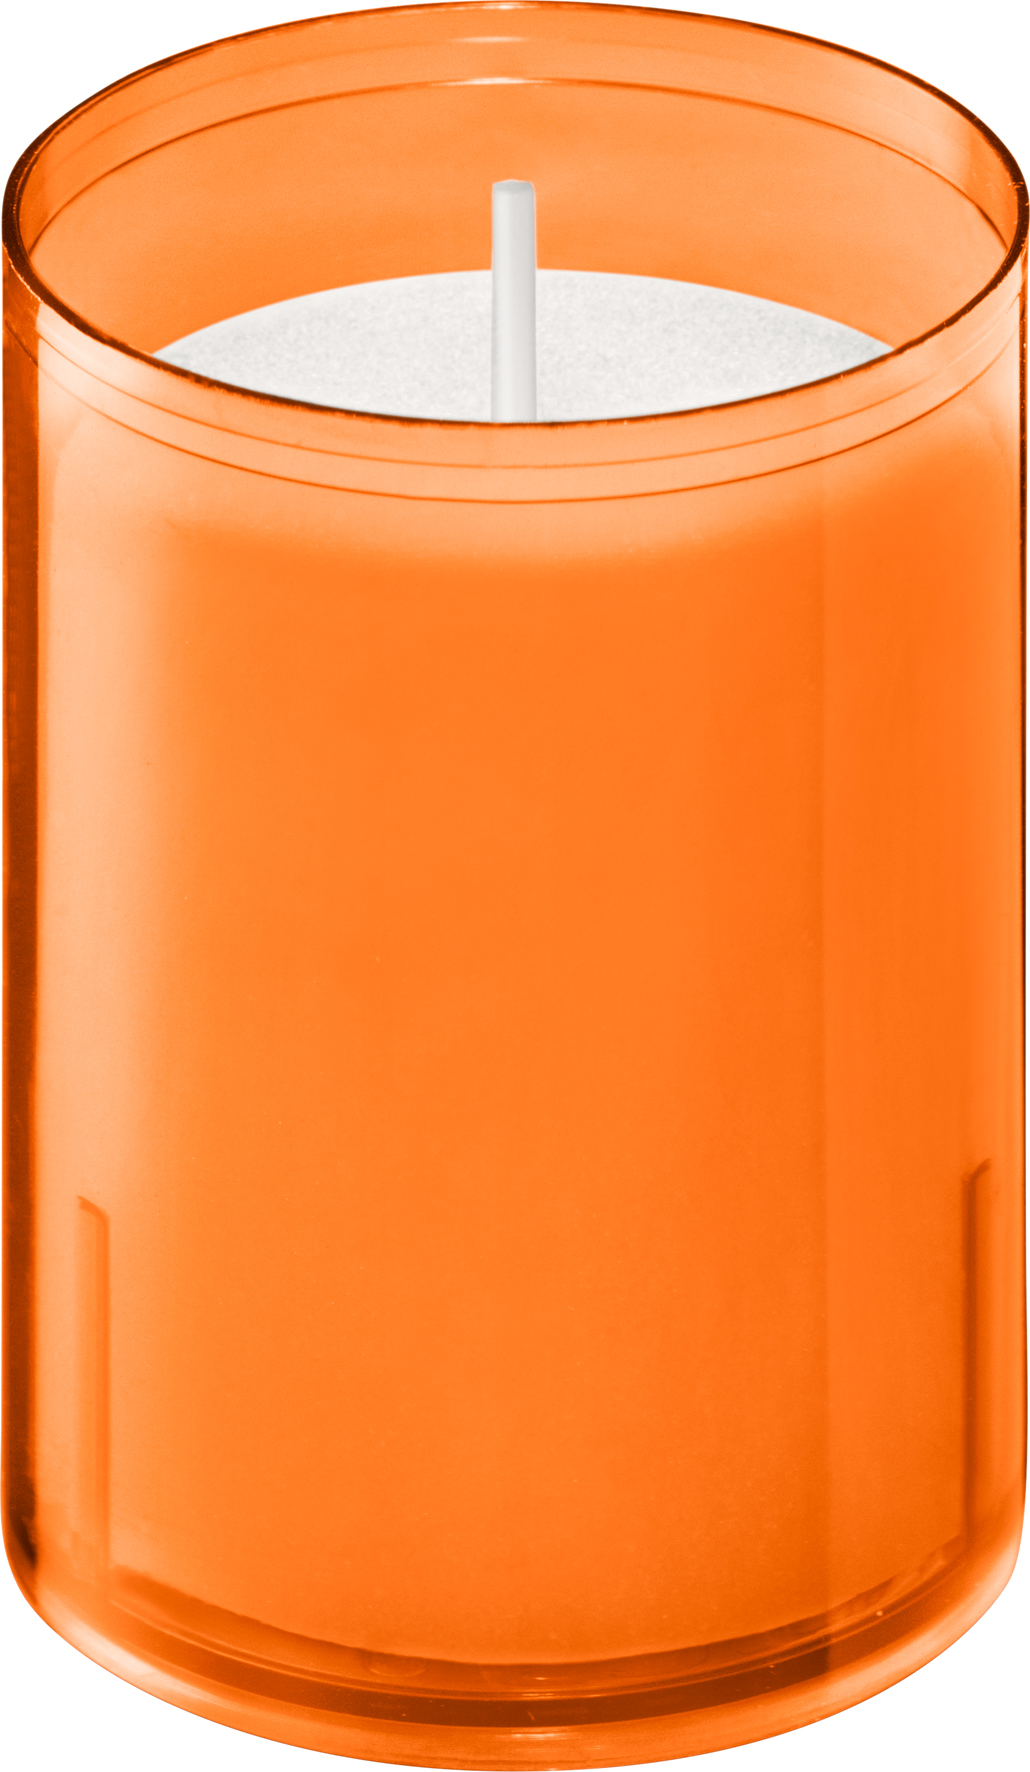 Horeca Relight® navullingen 64/52 tray 20 Oranje